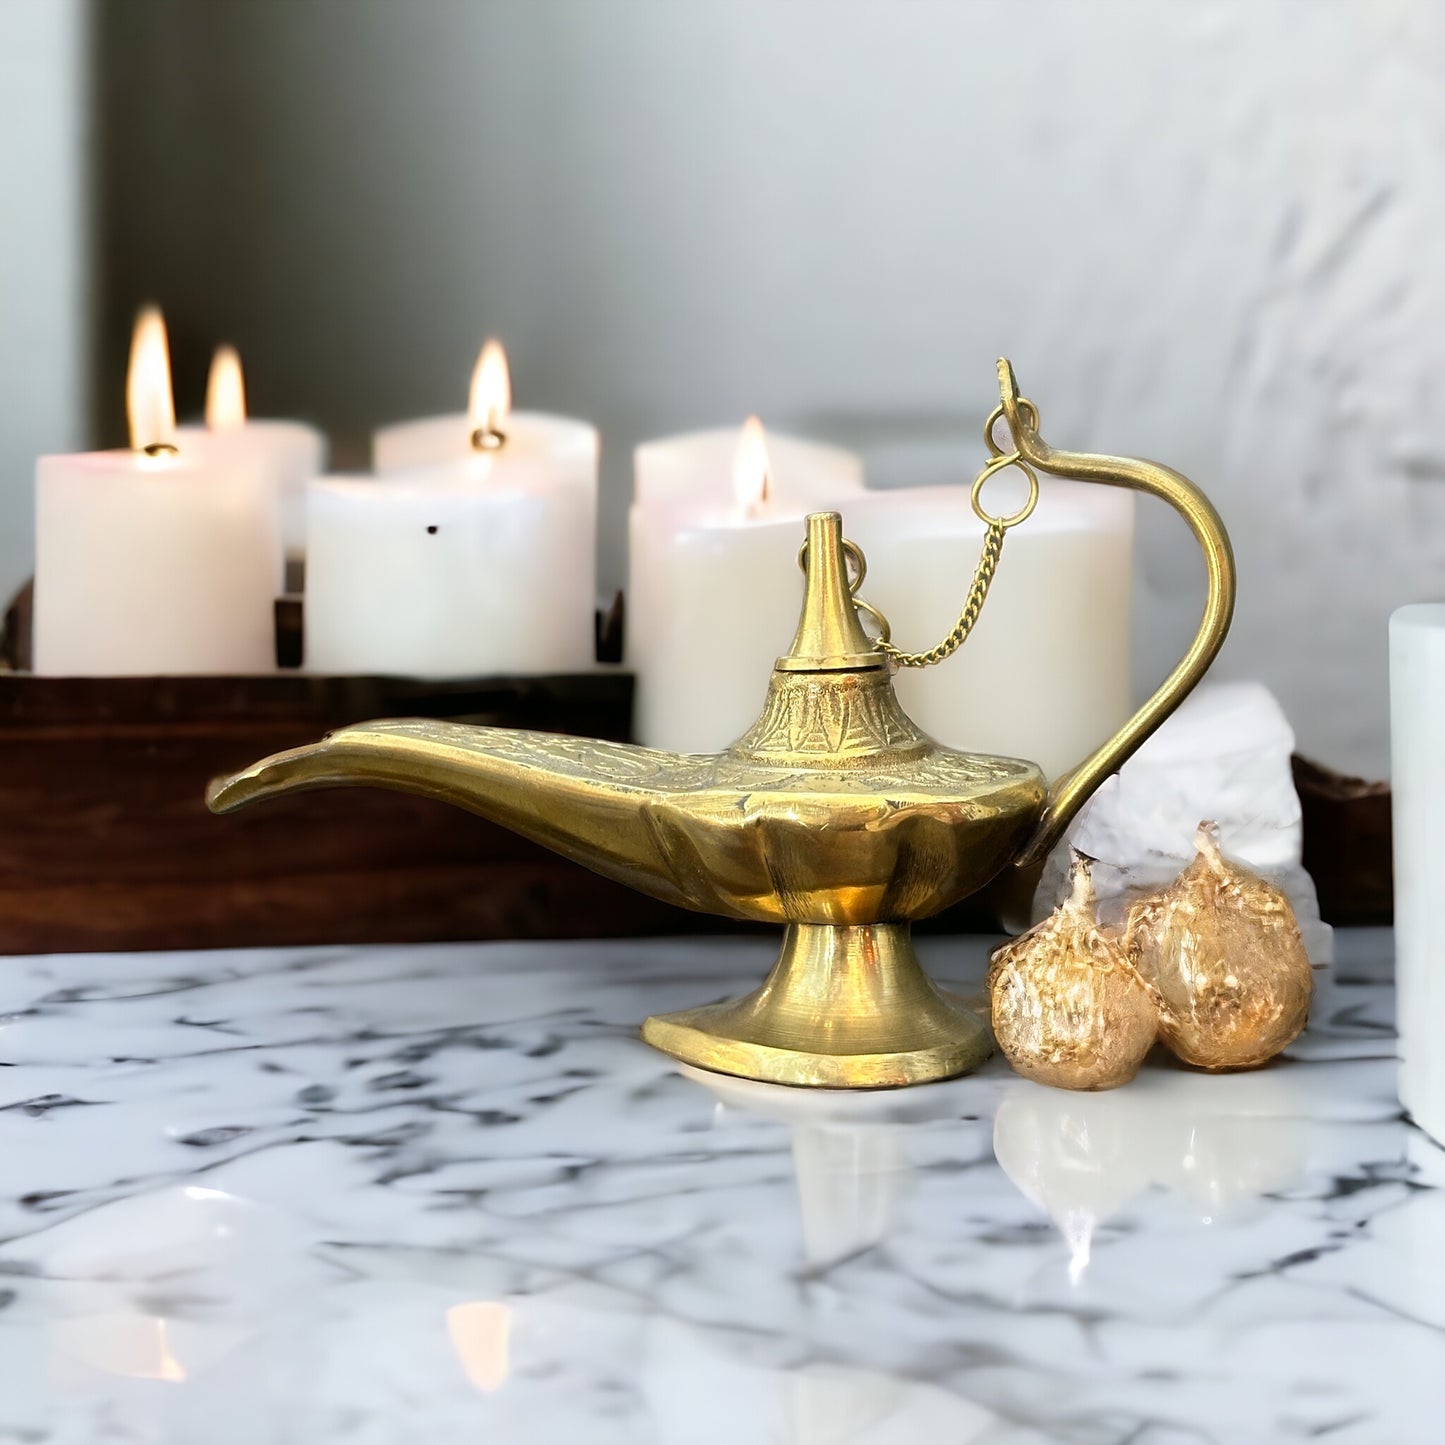 Magic Genie Aladdin Lamp (wish candle holder)✨💫